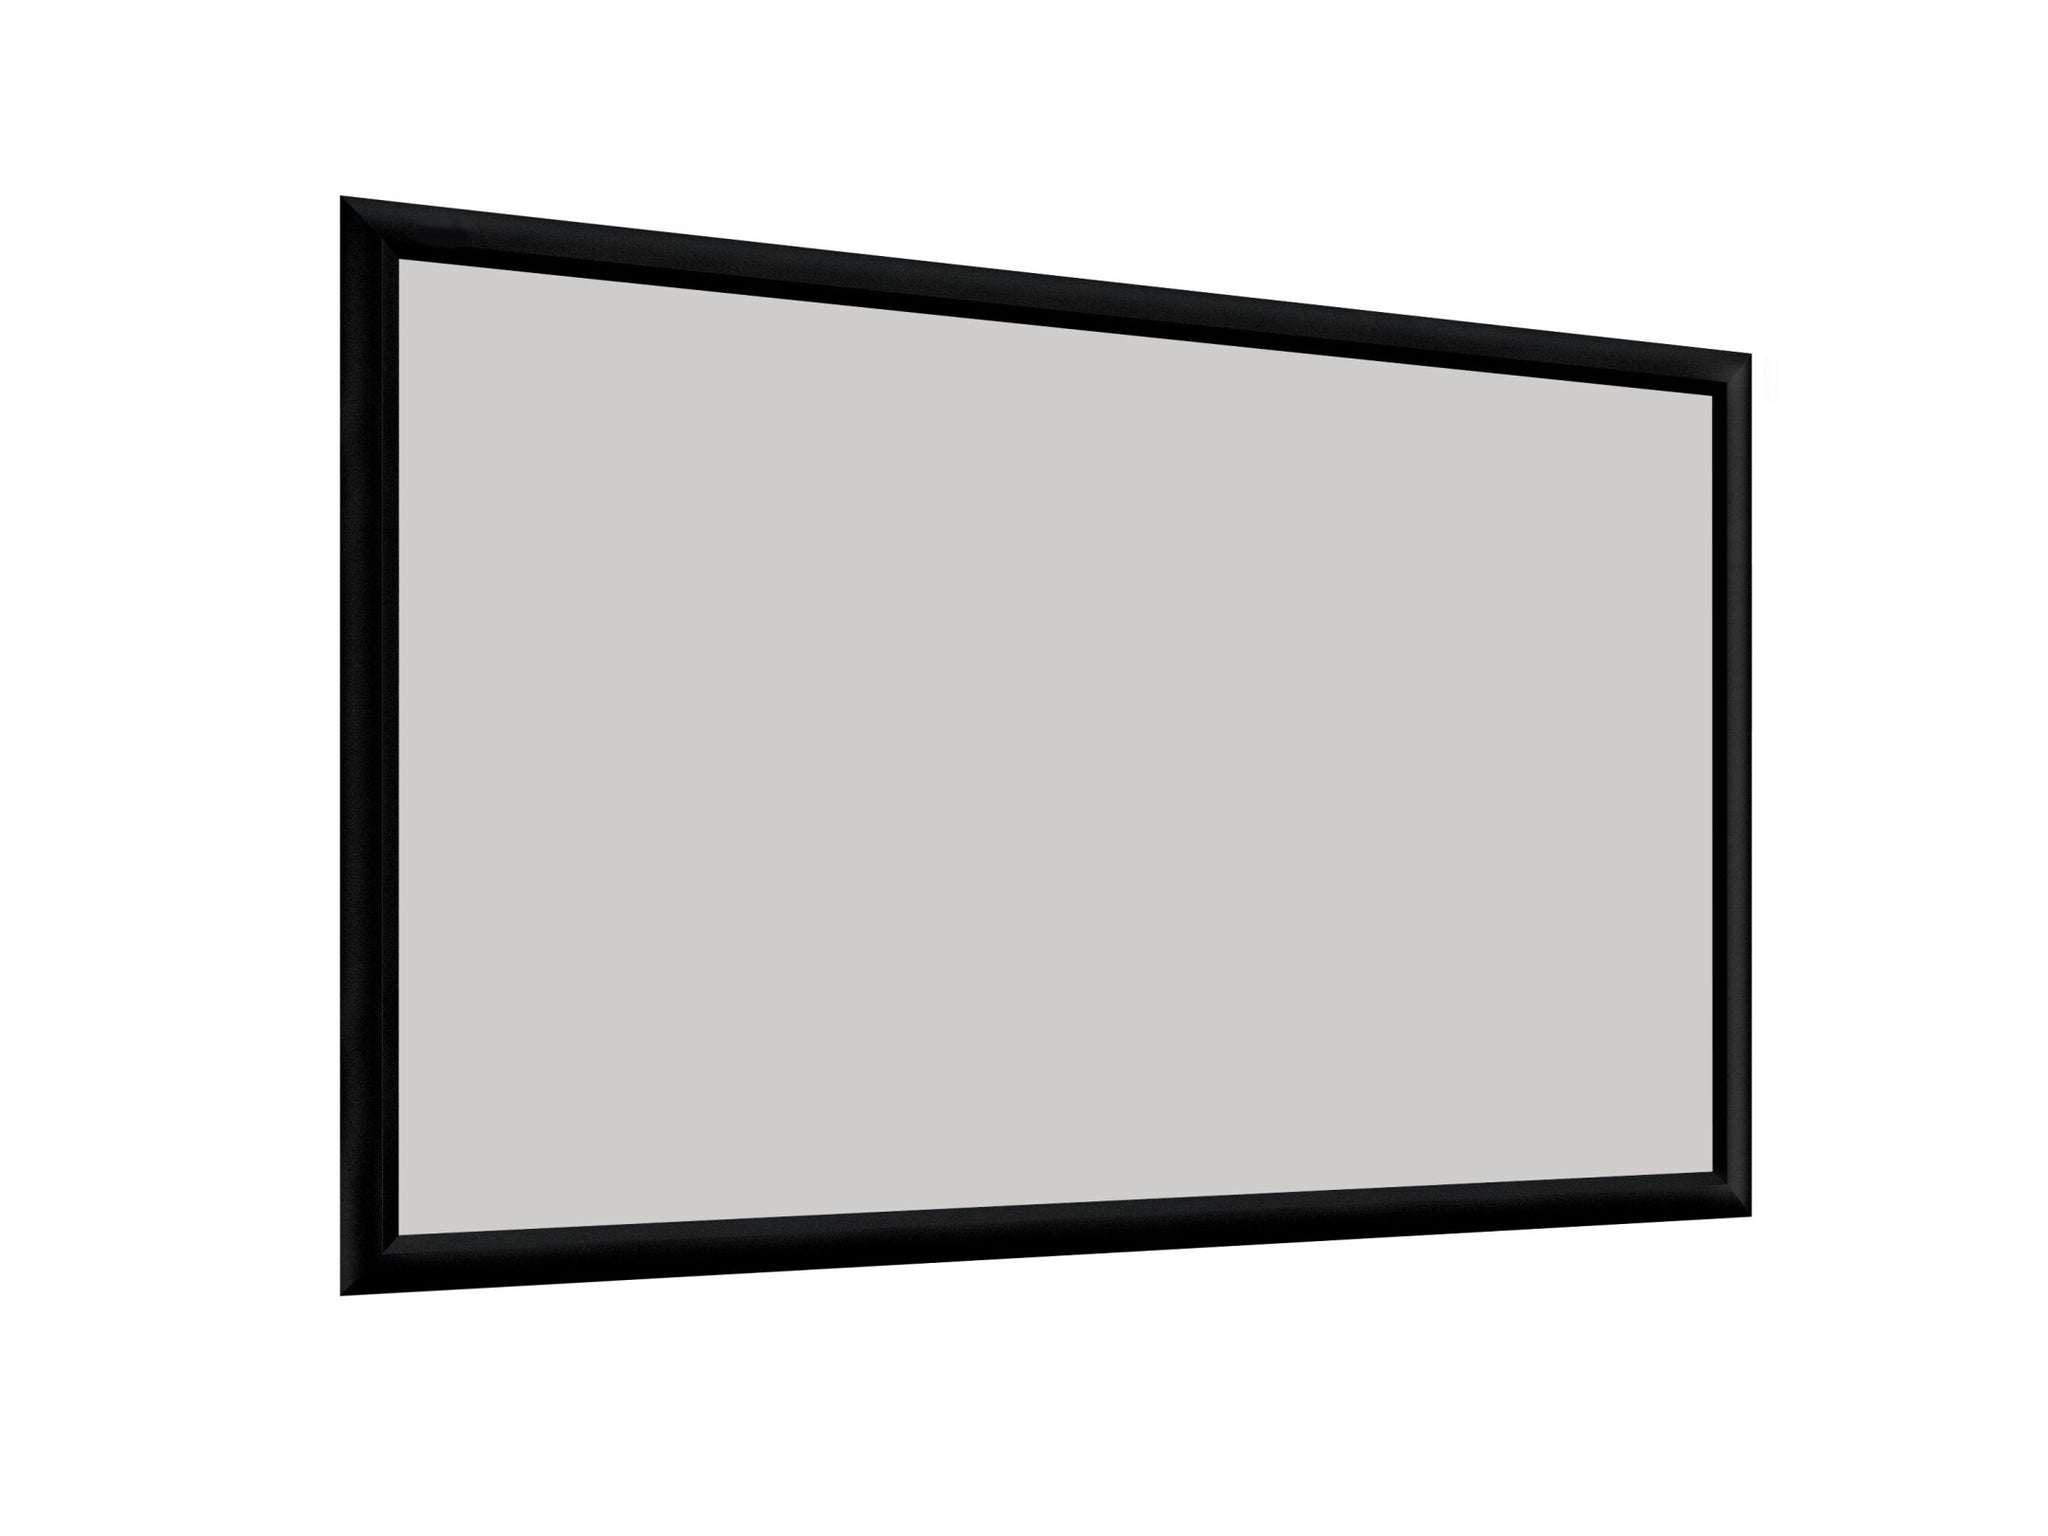 DELUXX Cinema High Contrast Frame Screen 220 x 124 cm, 100